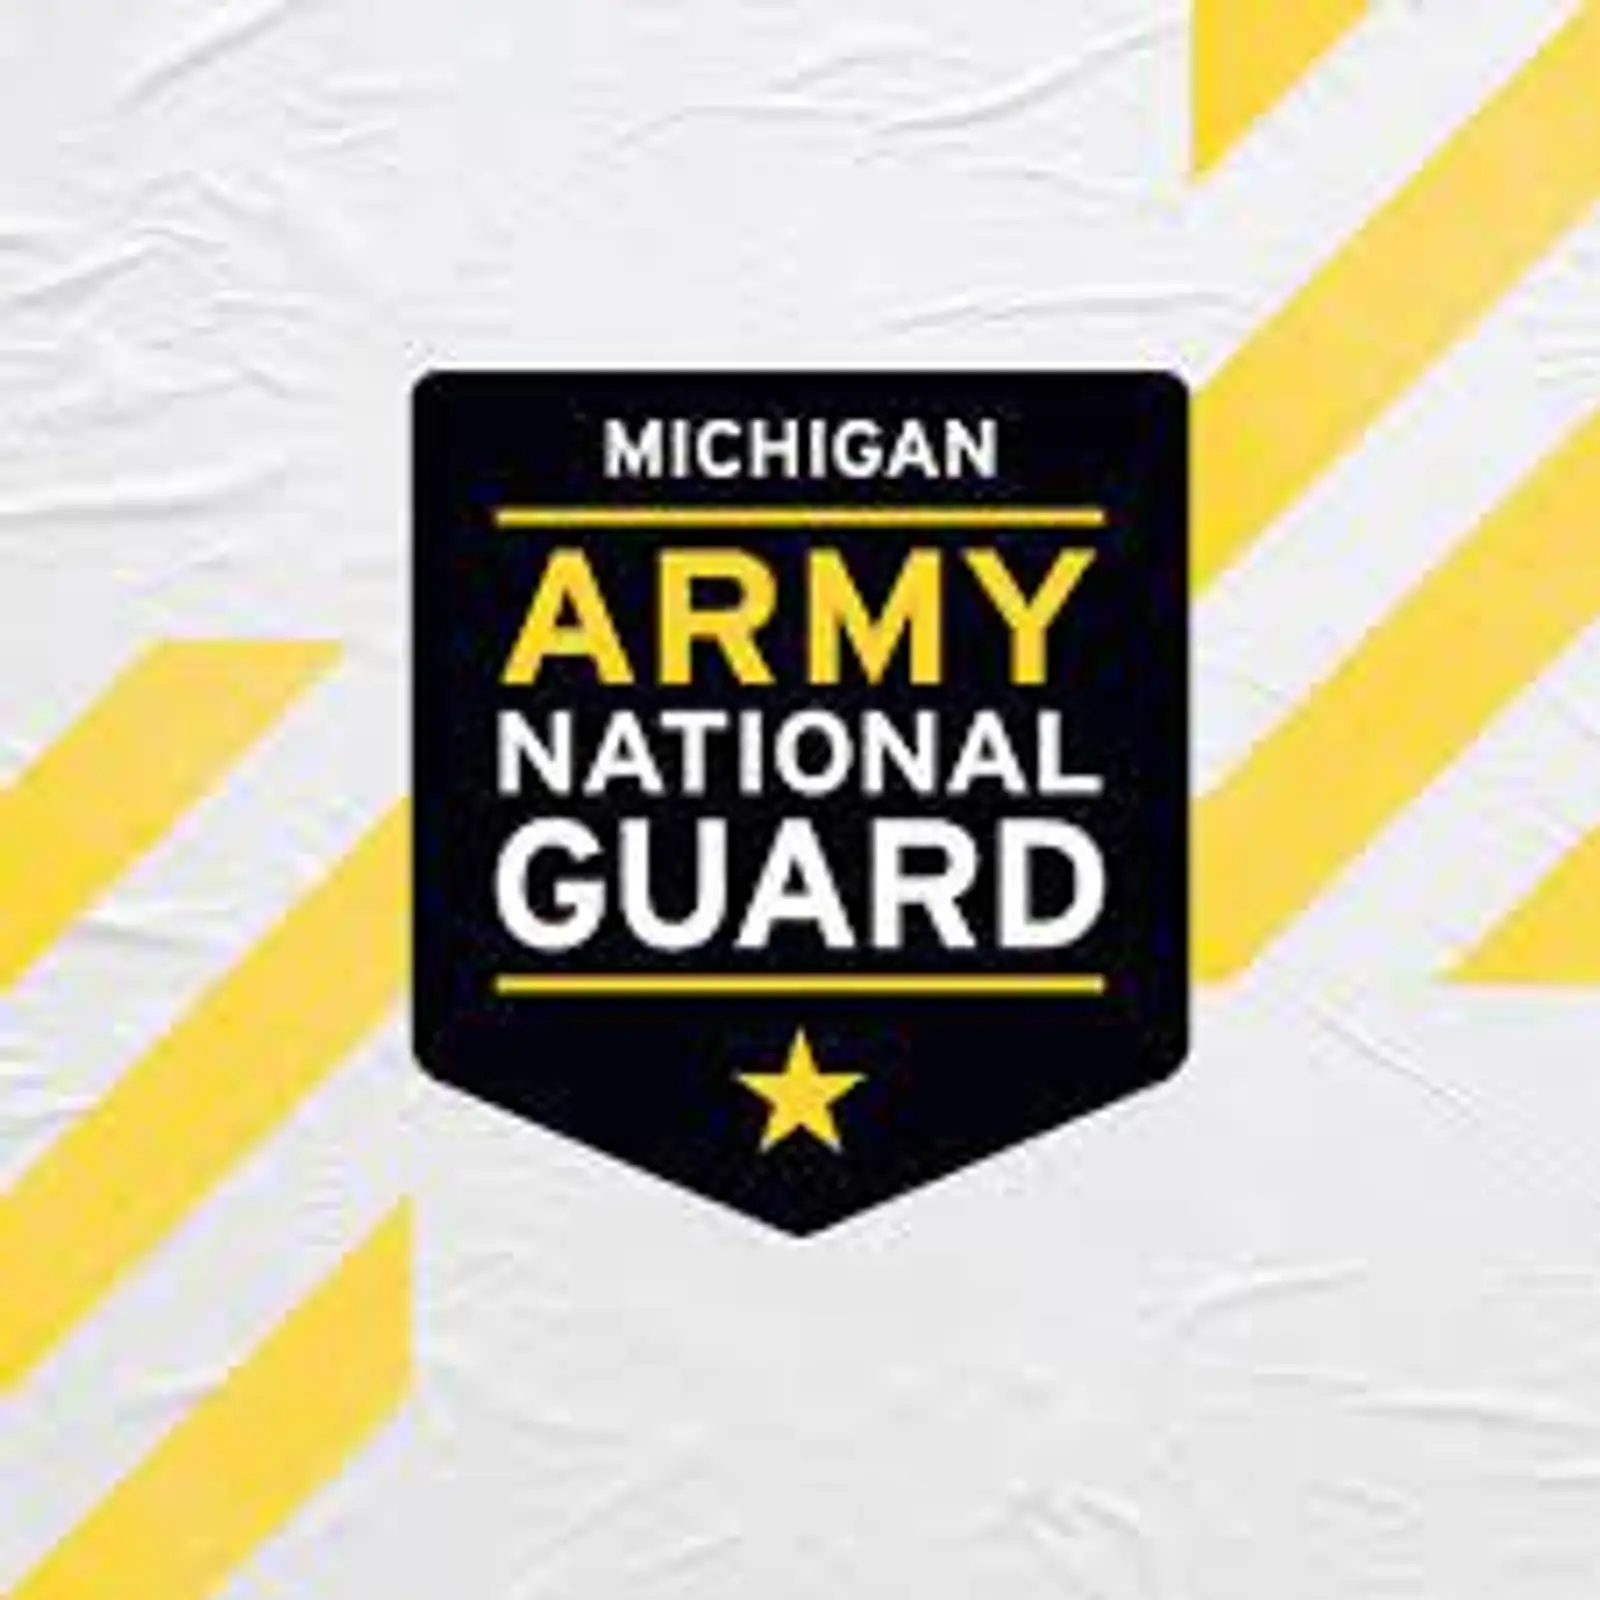 Michigan Army National Guard logo